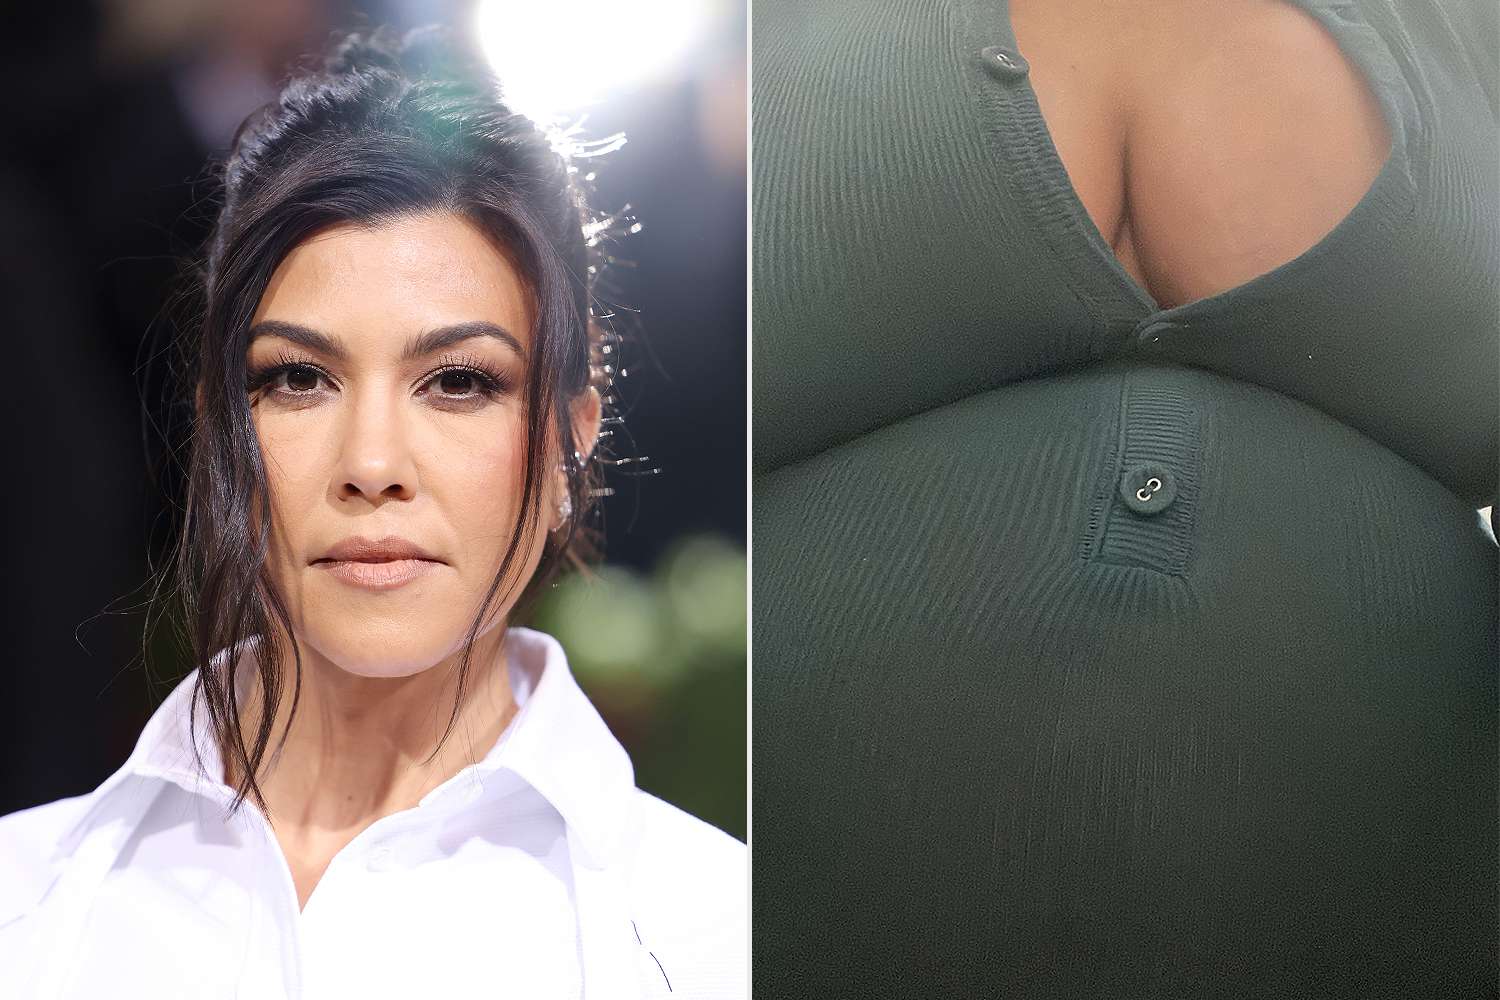 Pregnant Kourtney Kardashian Shows Off Her Baby Bump in Striking Photos 14